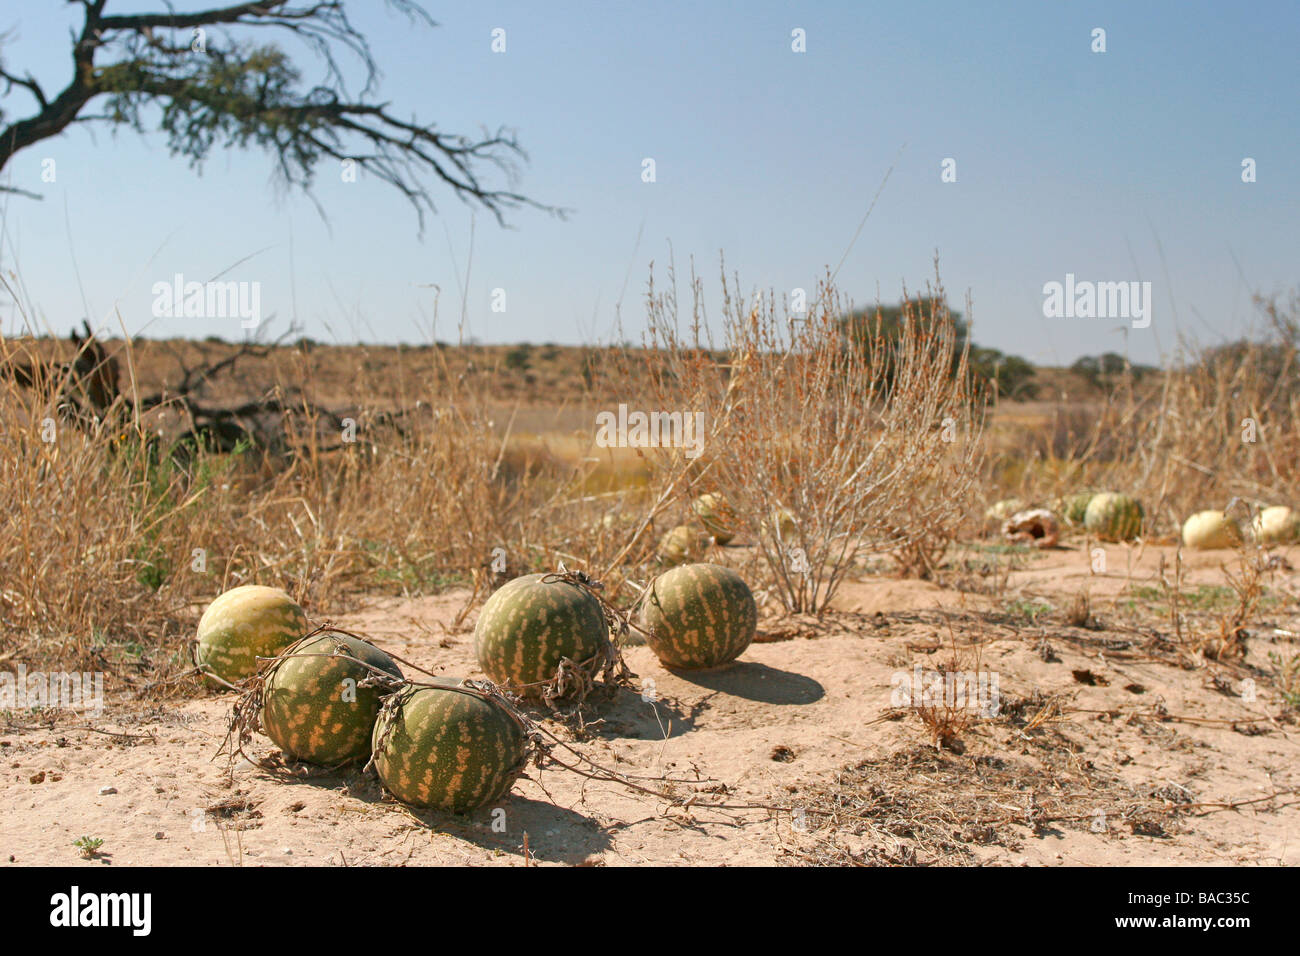 The citron melon (Citrullus lanatus), or tsamma grow on a sand dune in the Kalahari regeon of South Africa's Northern Cape Stock Photo